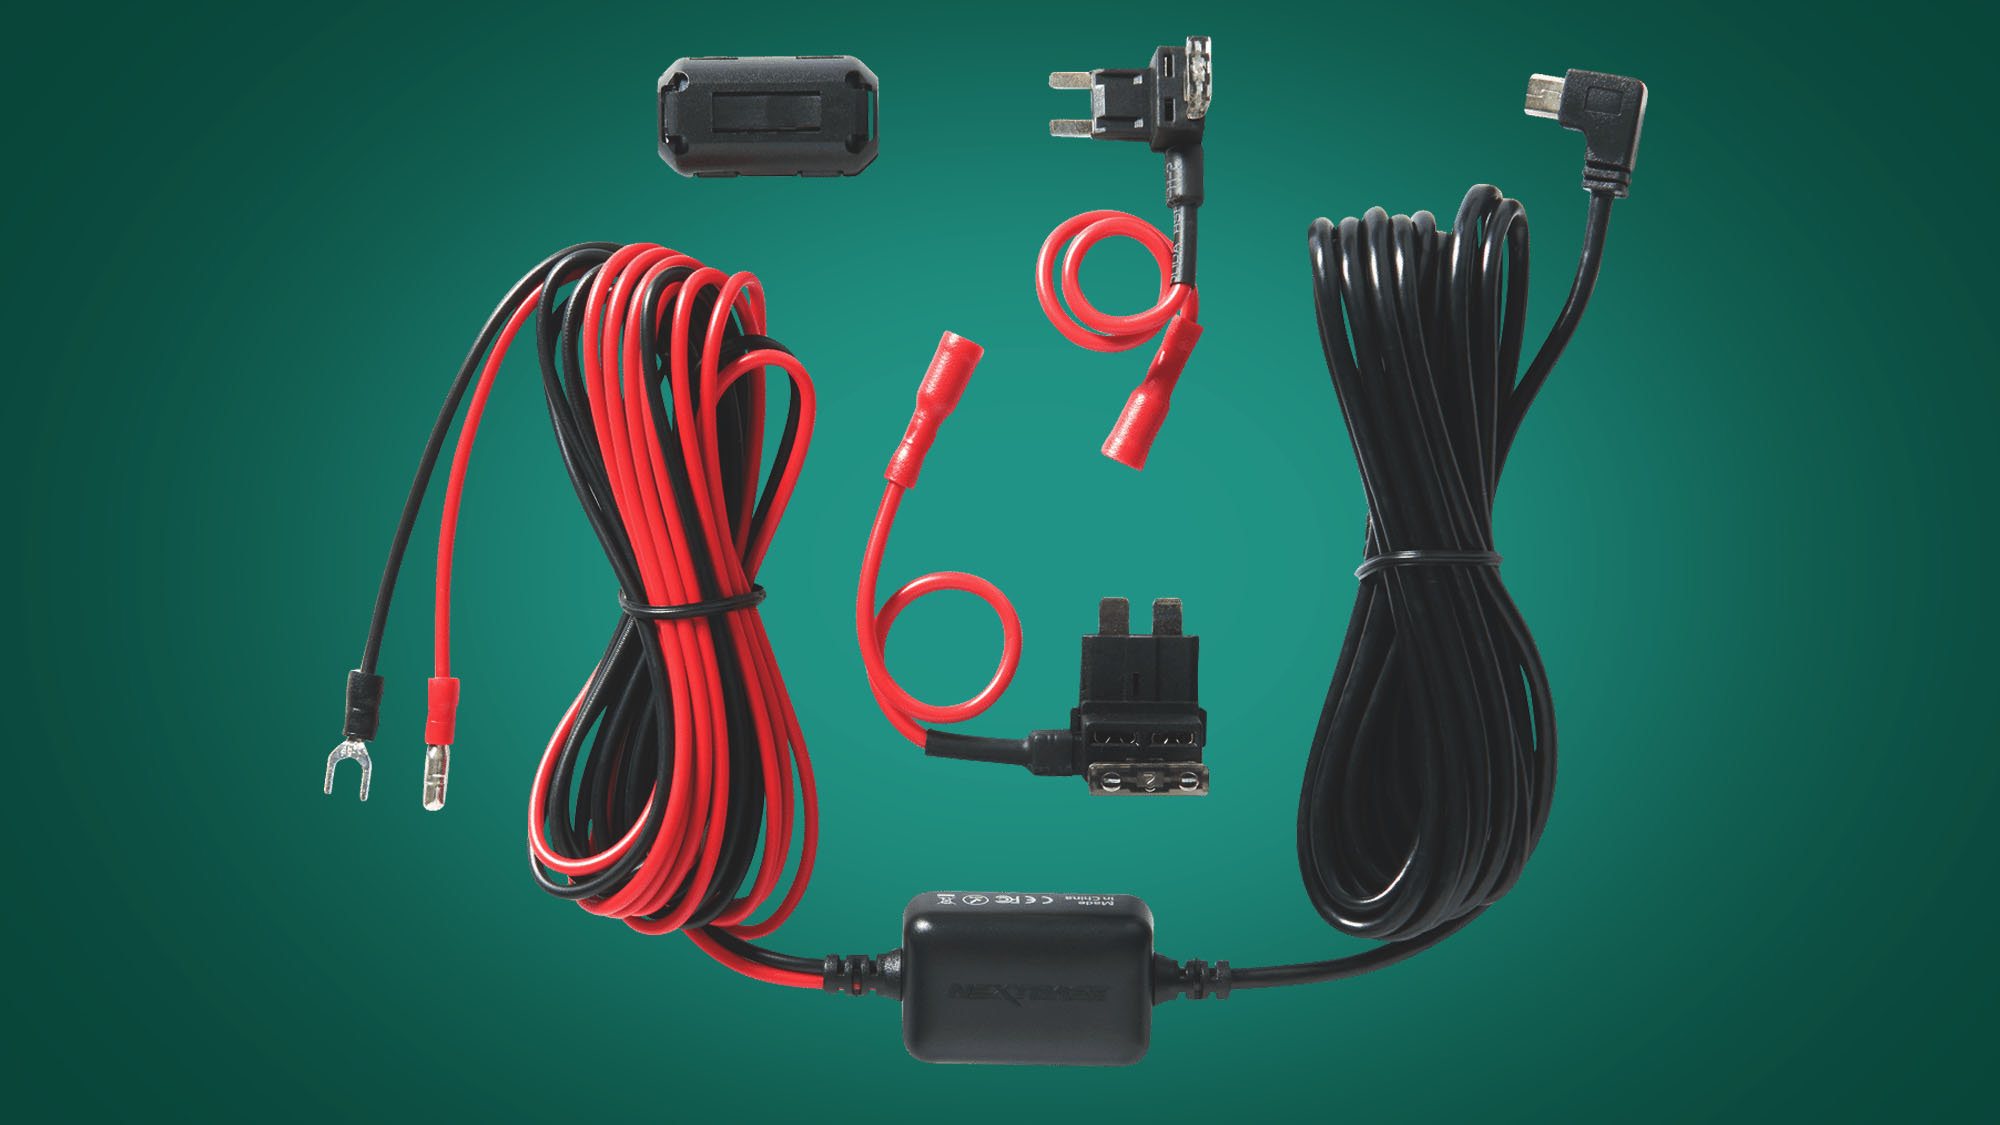 A hard-wiring dash cam kit from Nextbase